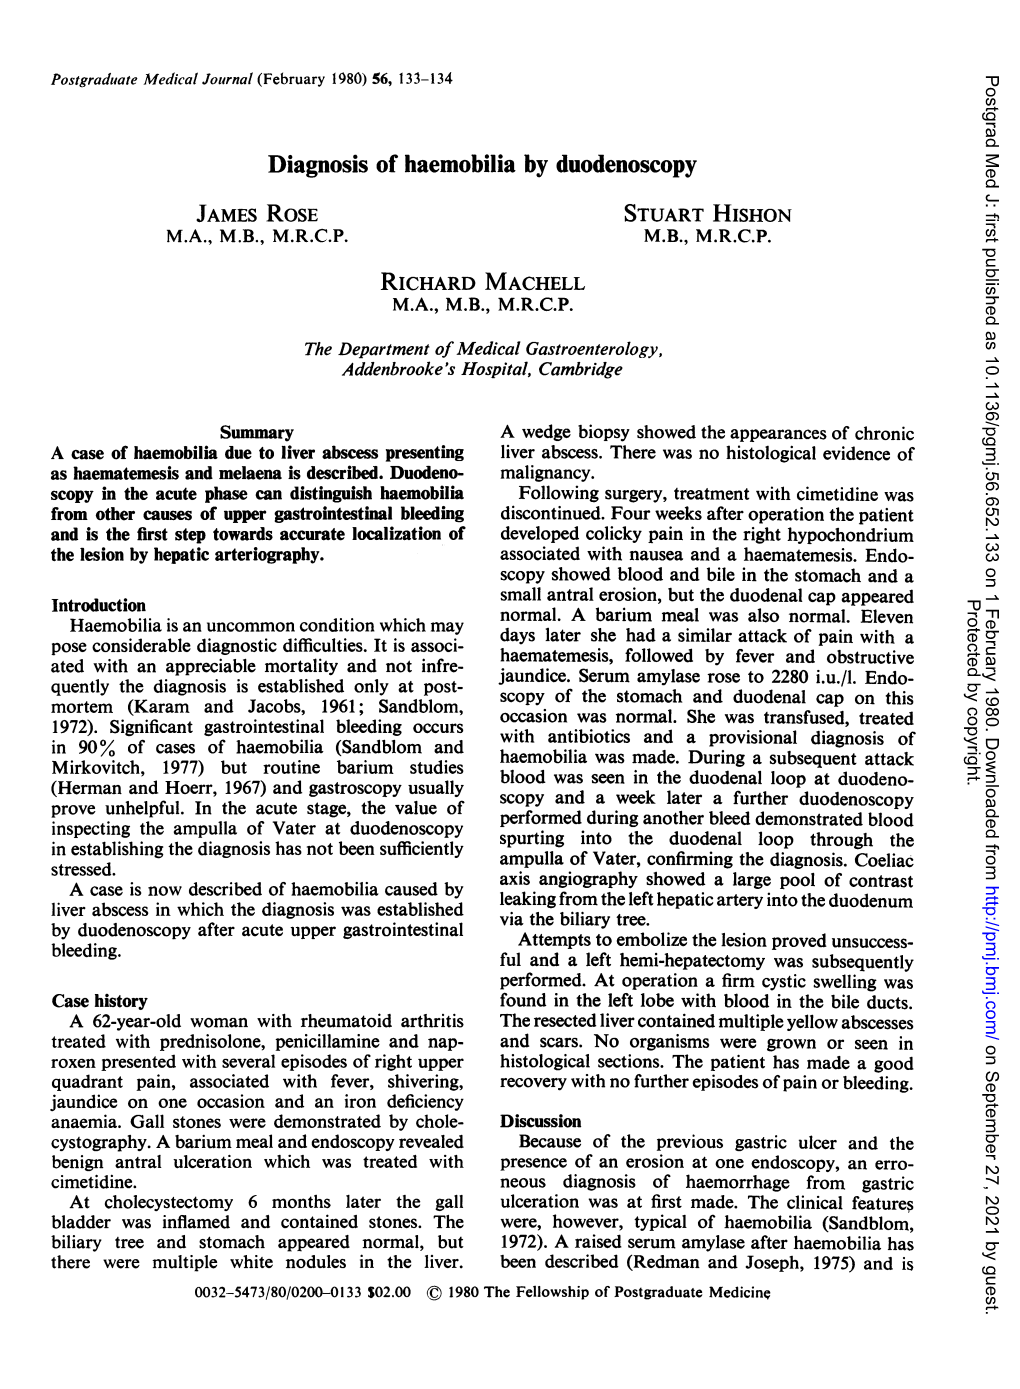 Diagnosis of Haemobilia by Duodenoscopy JAMES ROSE STUART HISHON M.A., M.B., M.R.C.P